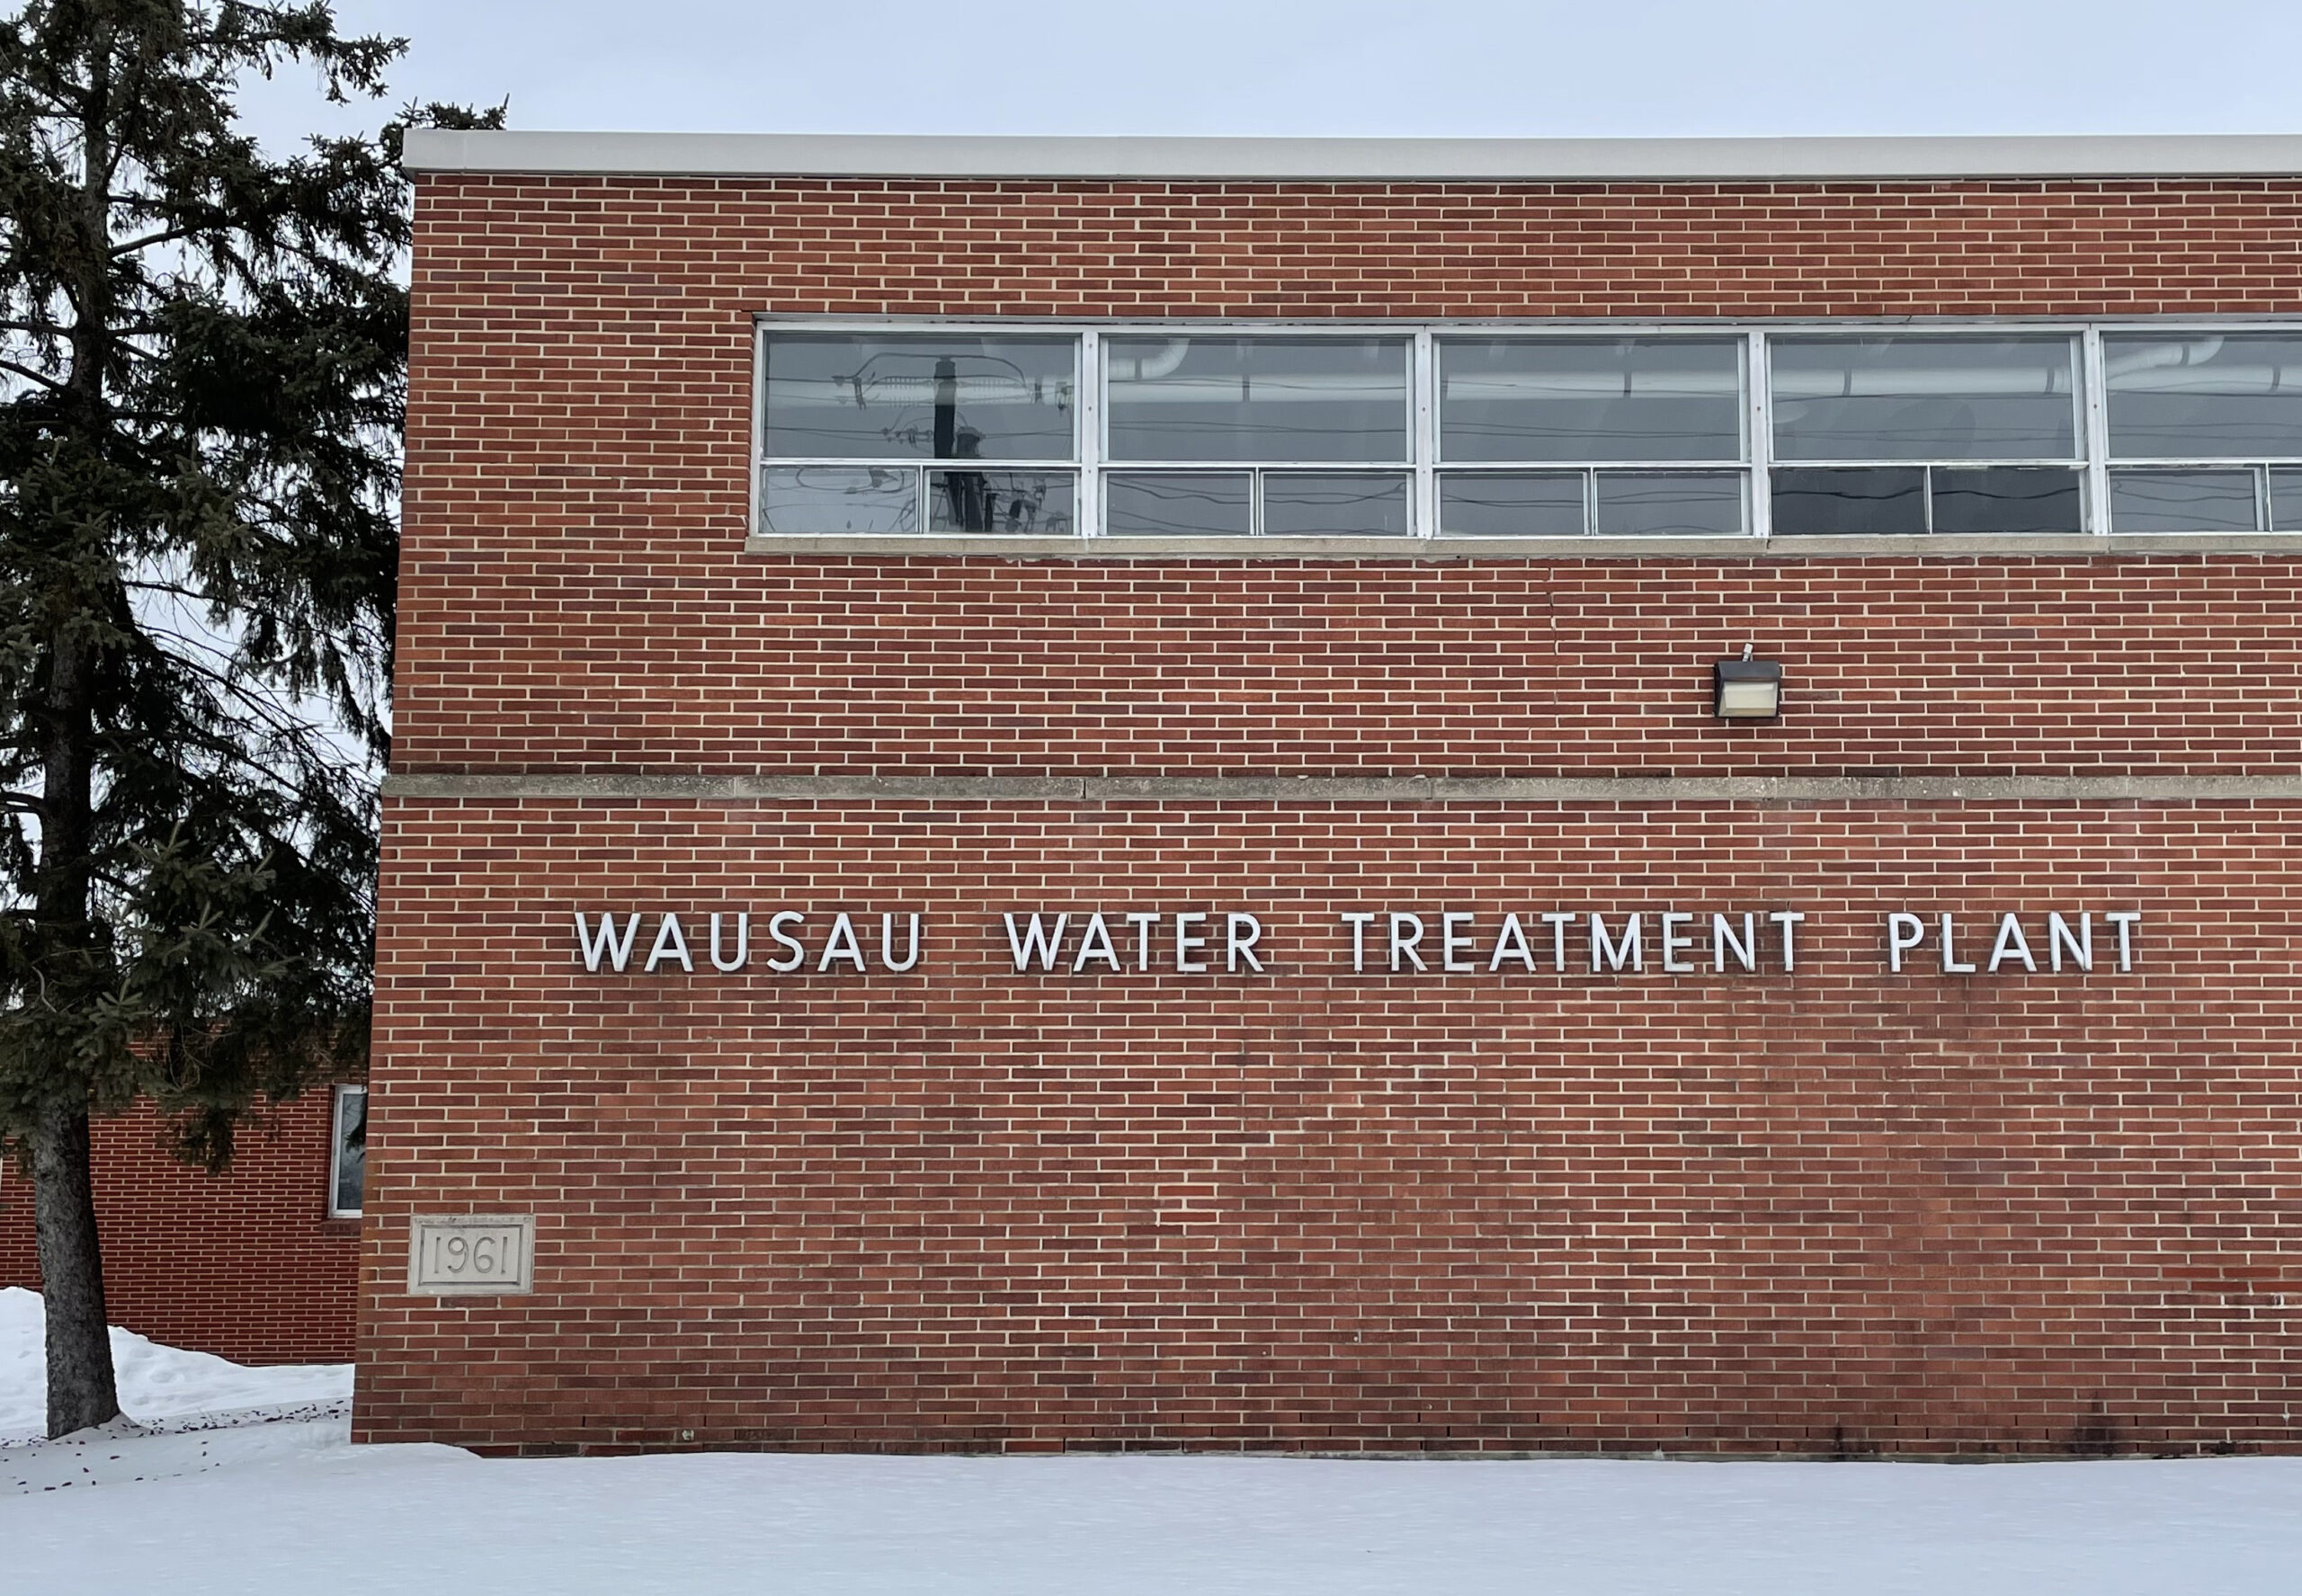 Wausau Water Treatment facility, Feb. 15, 2022